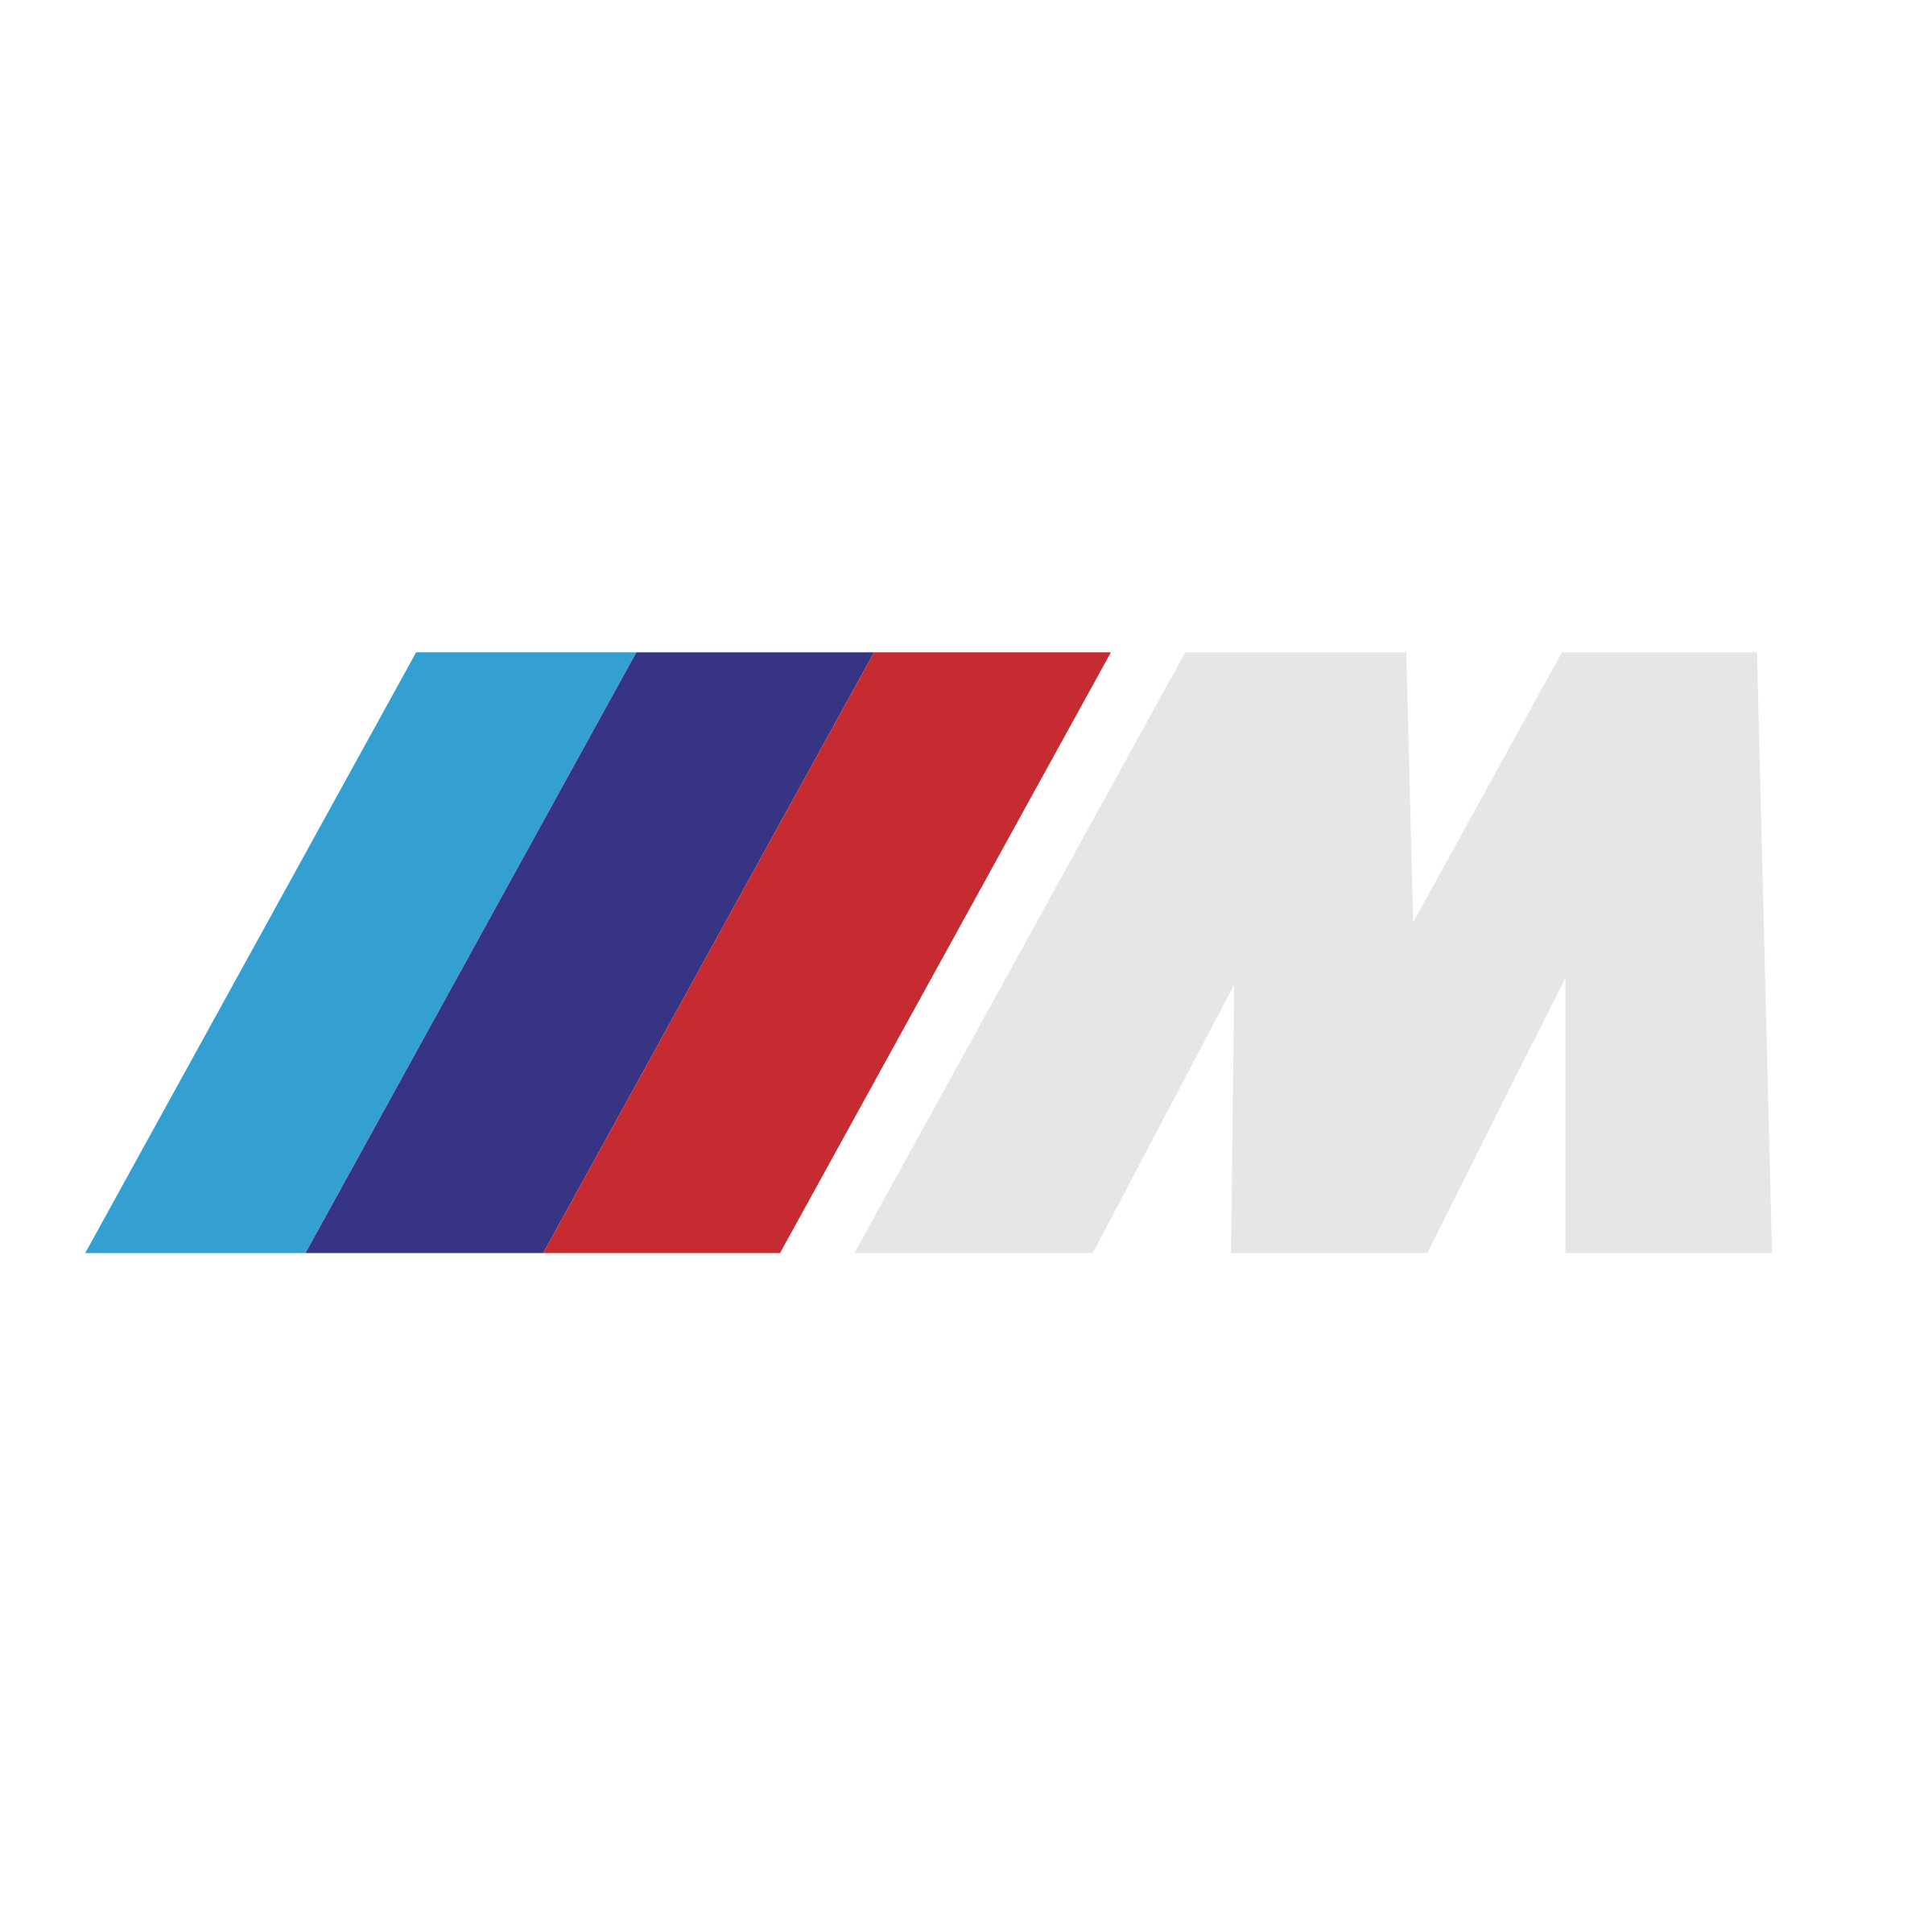 BMW M Logo - BMW M Series Logo PNG Transparent & SVG Vector - Freebie Supply